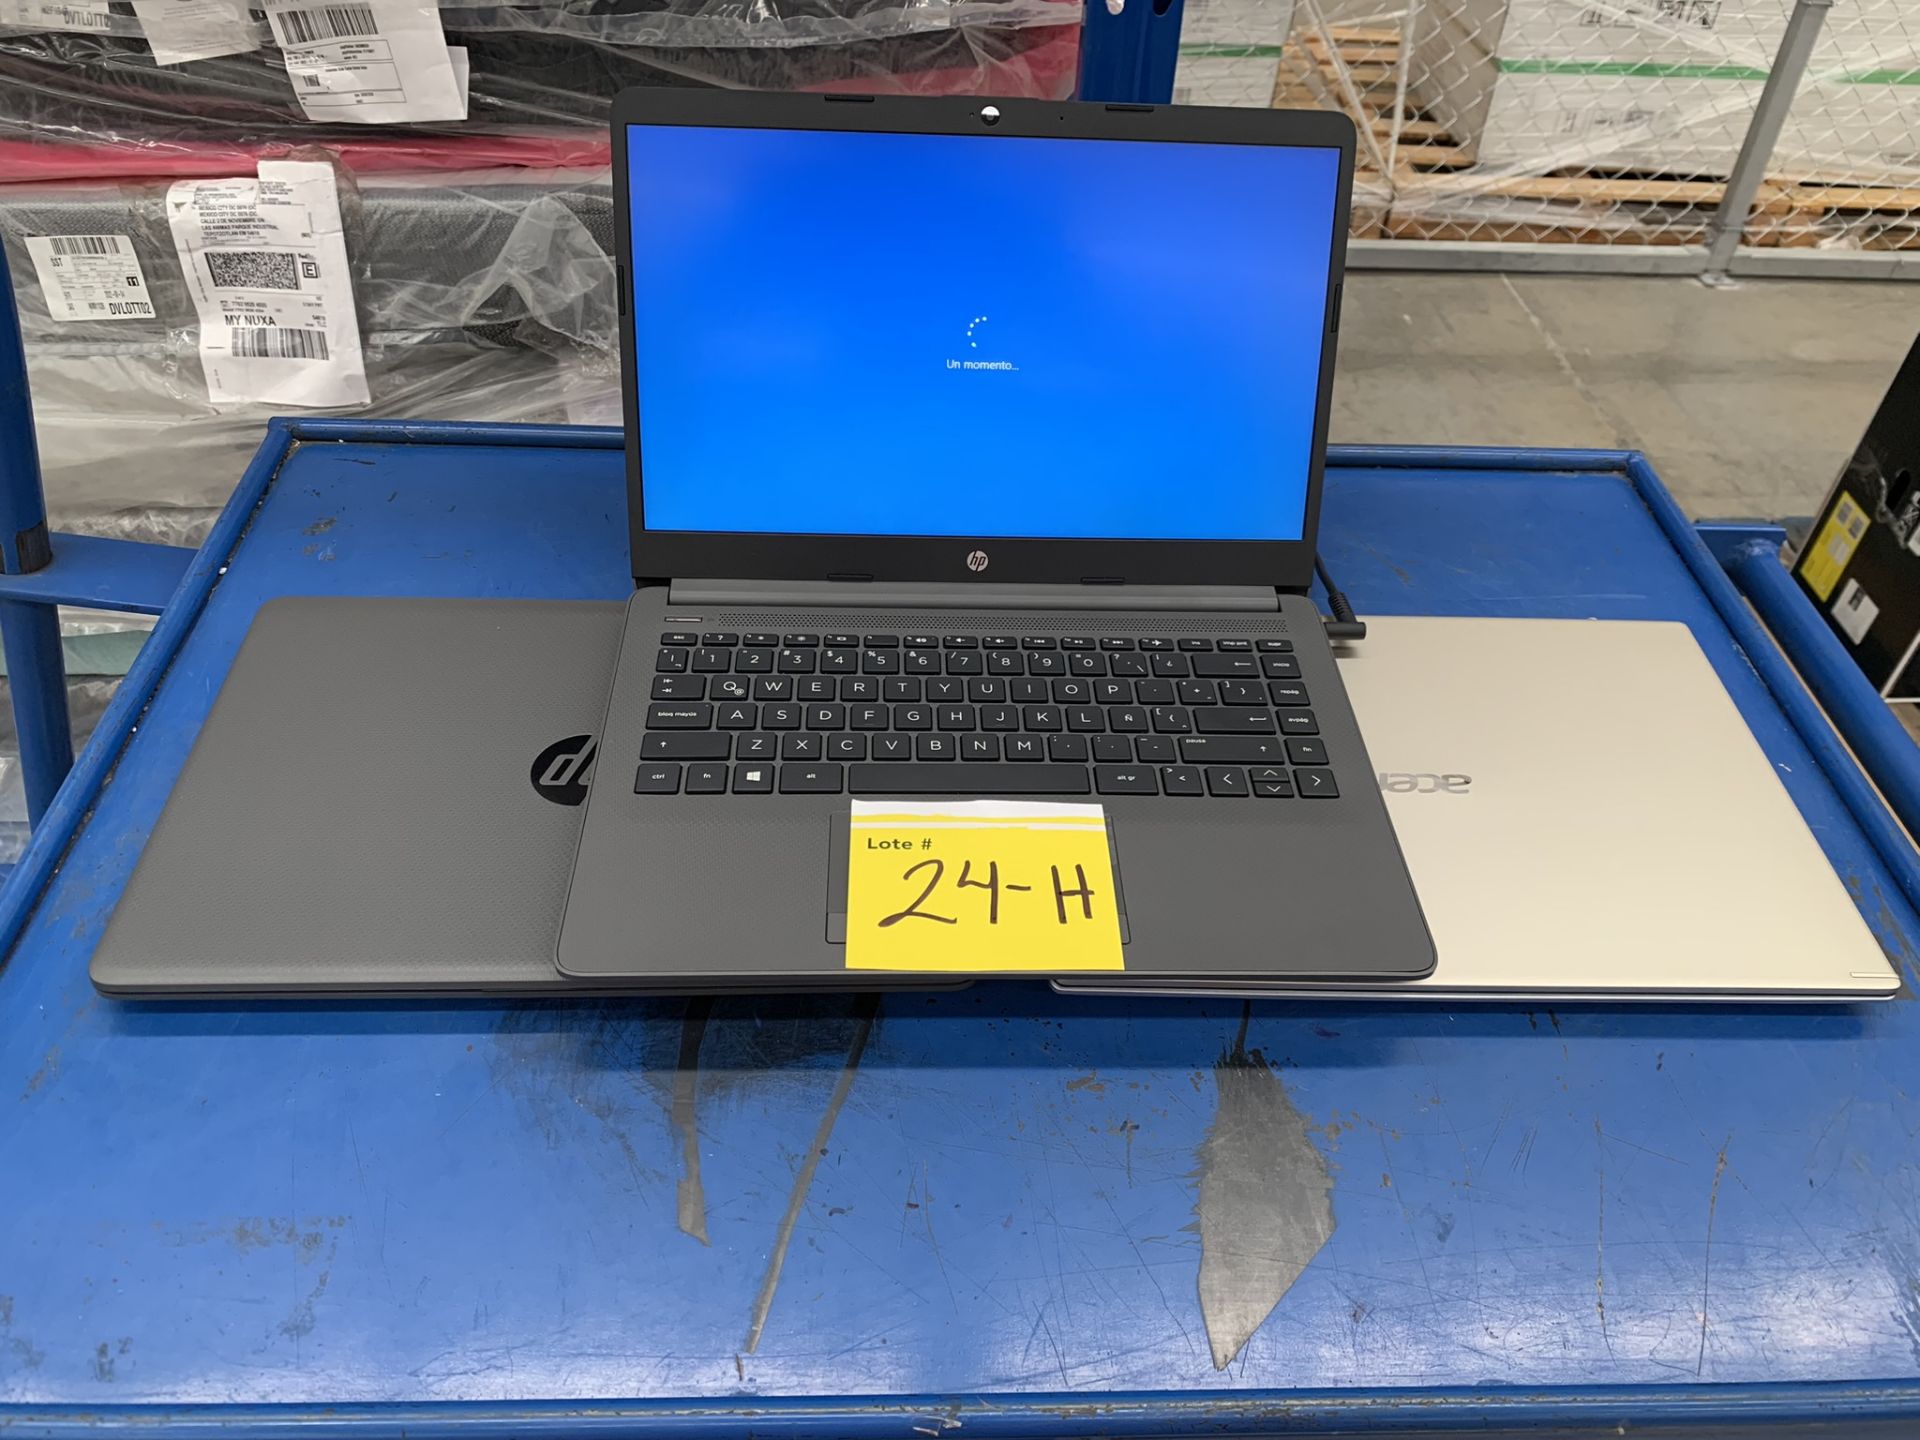 Lote De 3 Laptops Contiene: 1 Laptop Marca Acer Modelo Aspire 5 Serie 1022F3400 Color Gris So Windo - Image 9 of 18